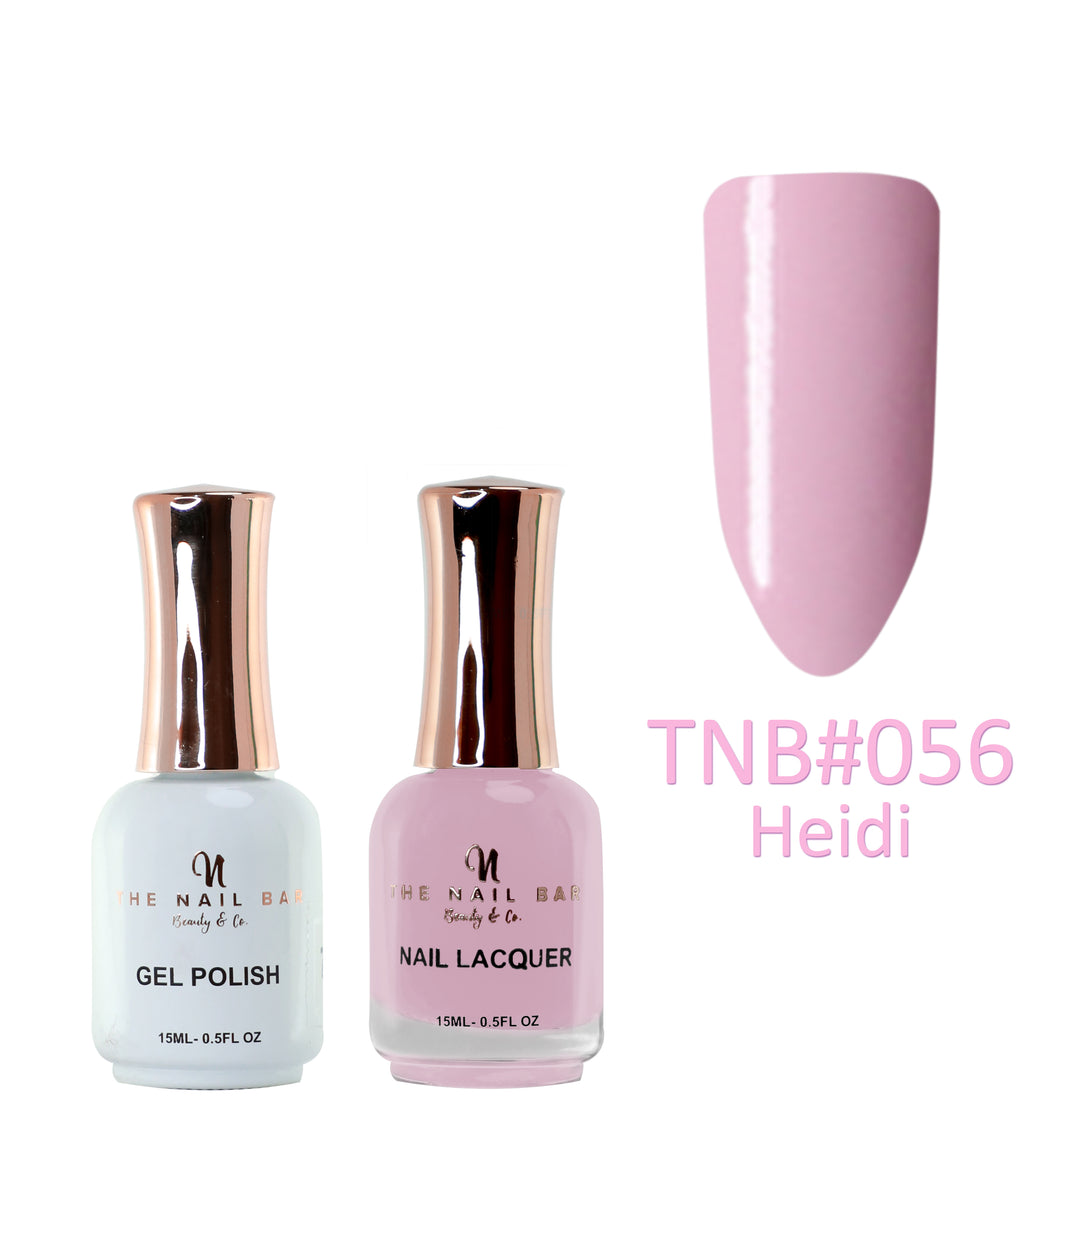 Dual Polish/Gel colour matching (15ml) - Heidi - The Nail Bar Beauty & Co.